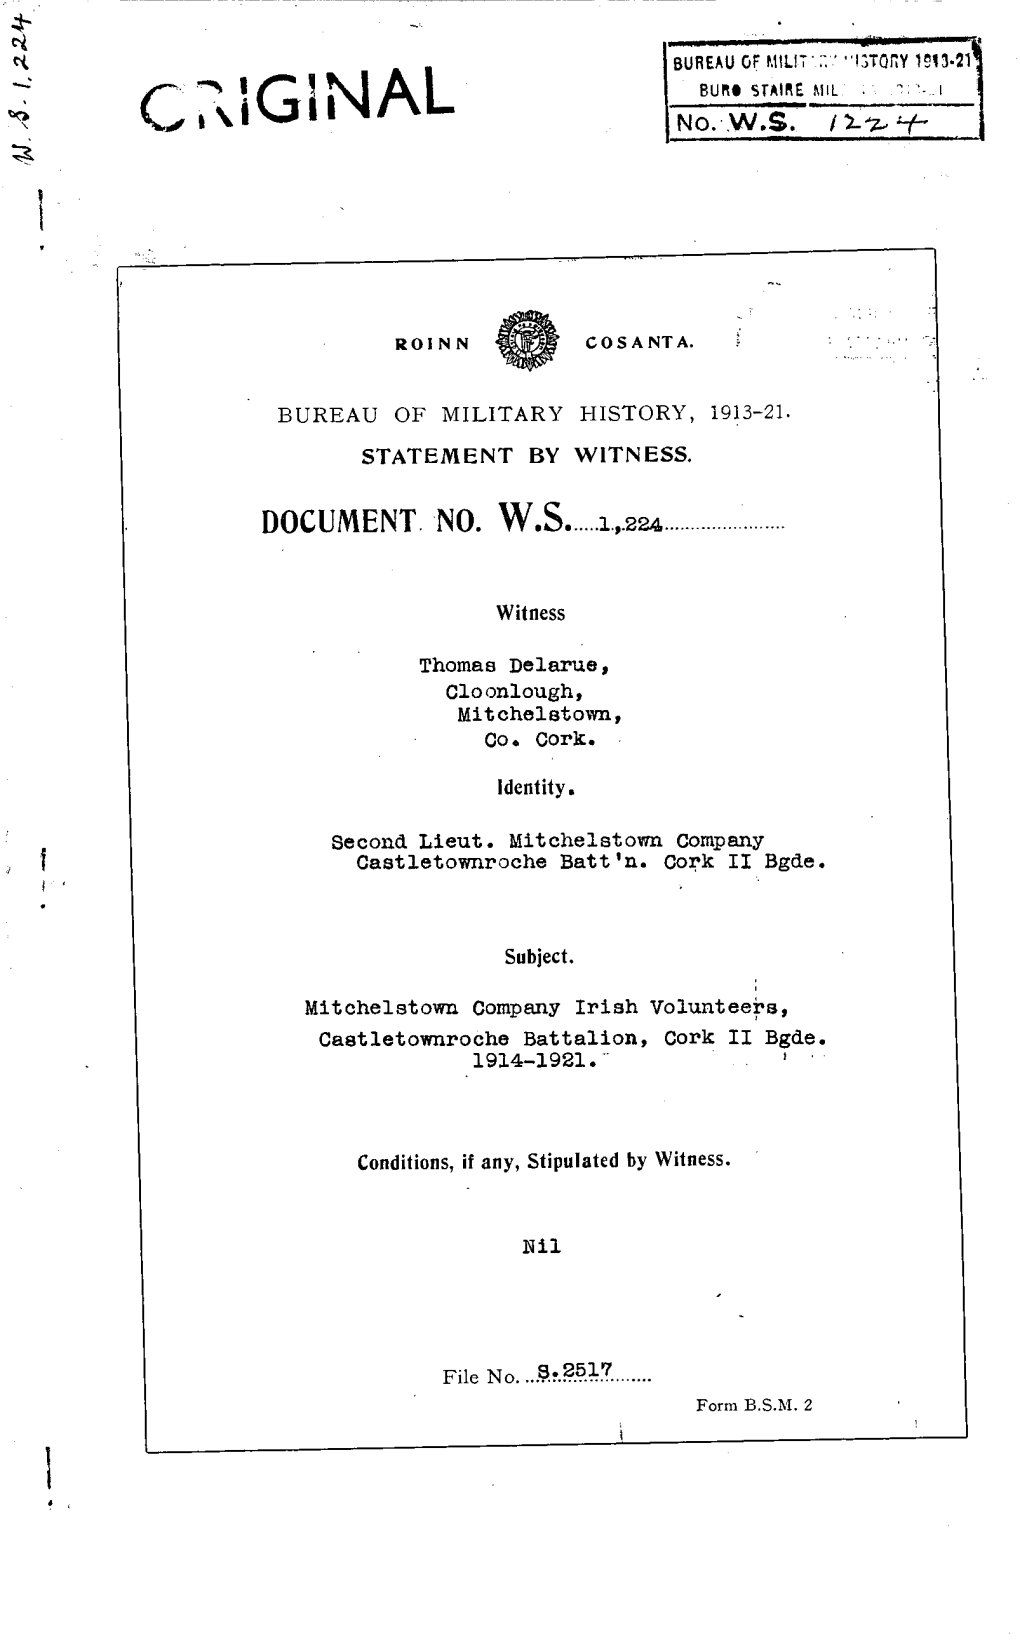 Original Bureauofmilitary History1913-21